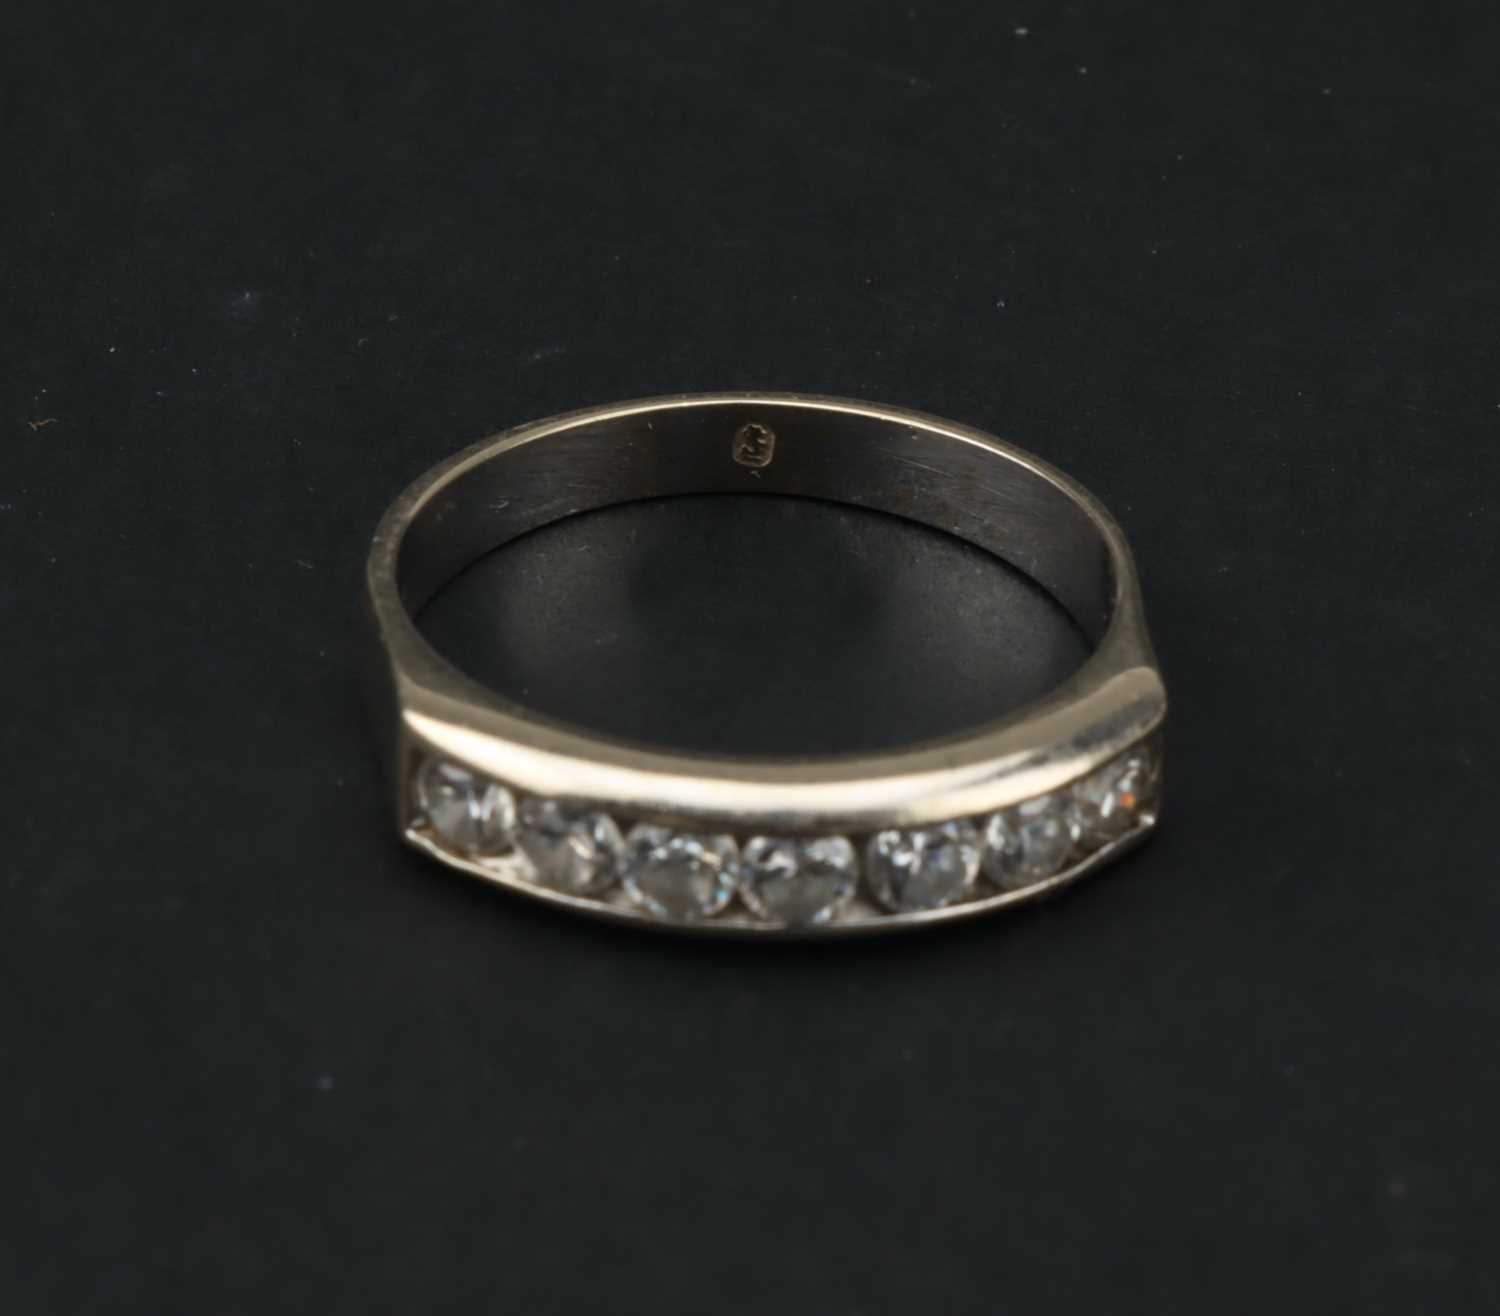 Lot 106 - 18 ct White Gold Diamond Ring